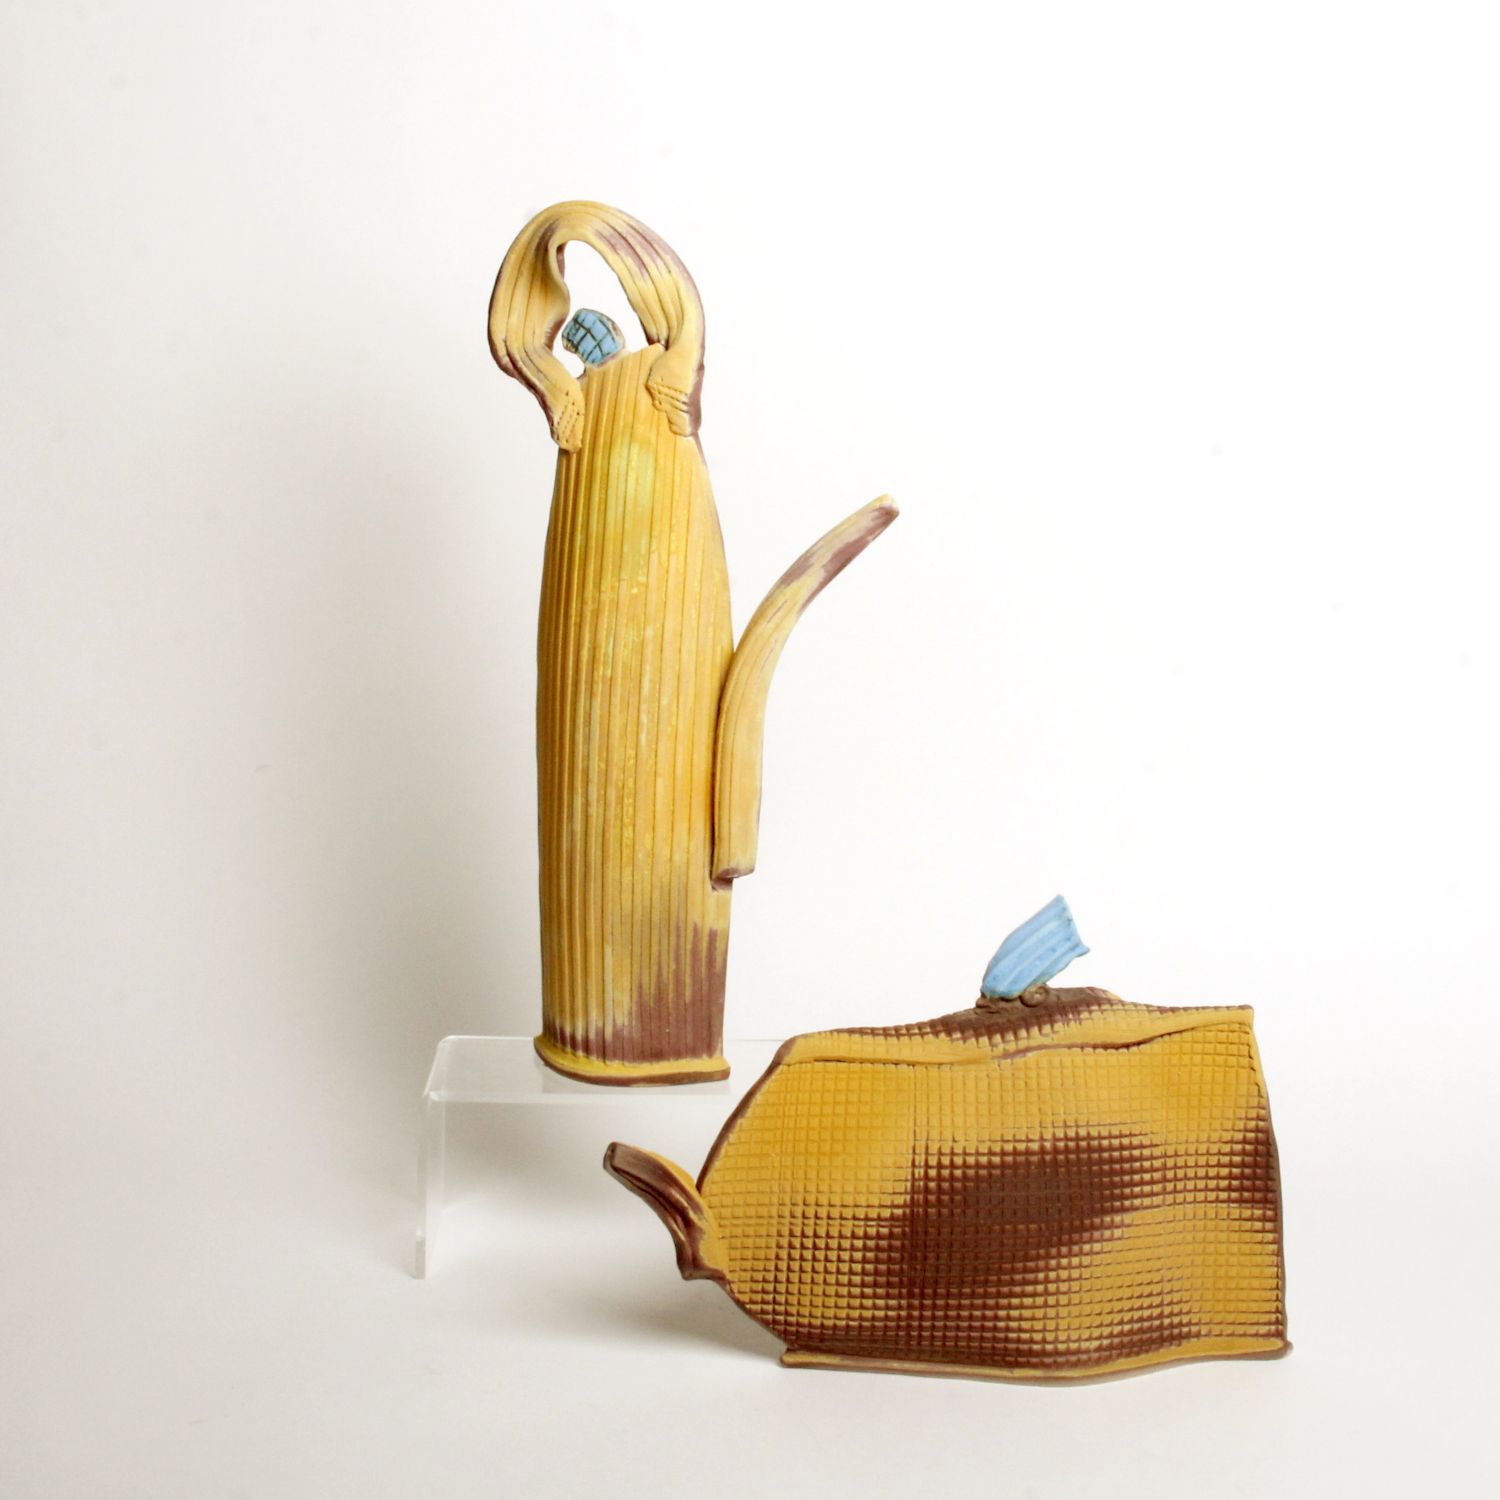 Shu-Chen Cheng: Yellow Flat Teapot Sculpture Product Image 3 of 4